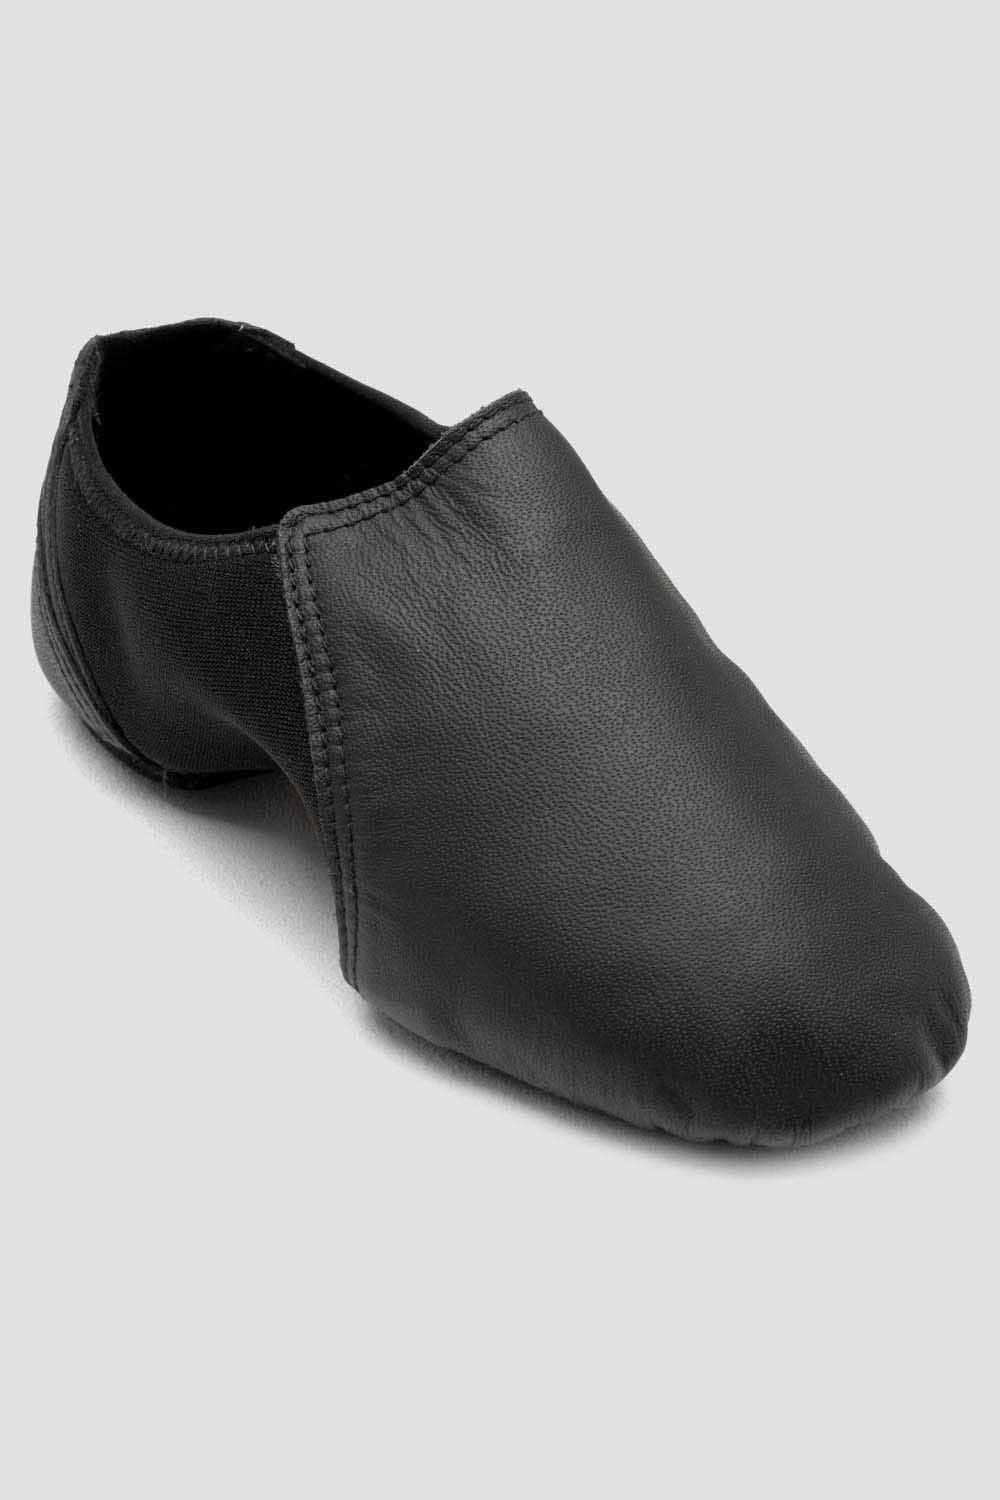 Childrens Spark Leather & Neoprene Jazz Shoes, Black – BLOCH Dance US